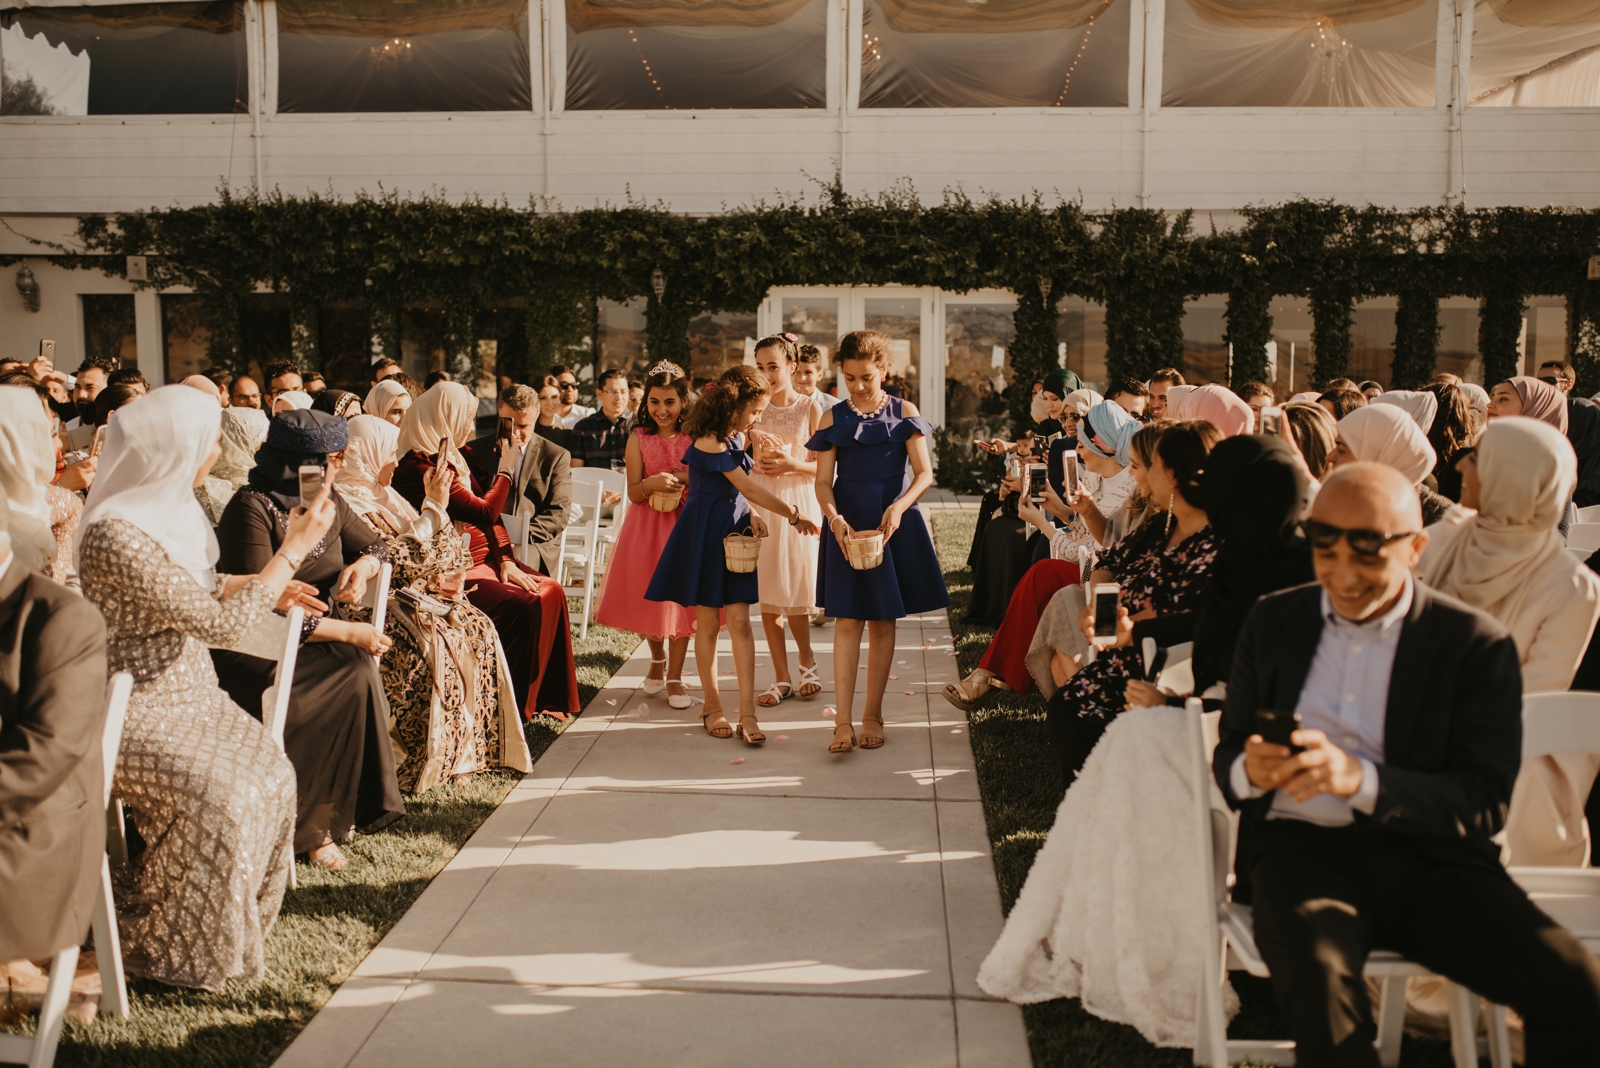 California Wedding Ceremony overlooking Vineyards | Juju Photography - California Wedding Photographer